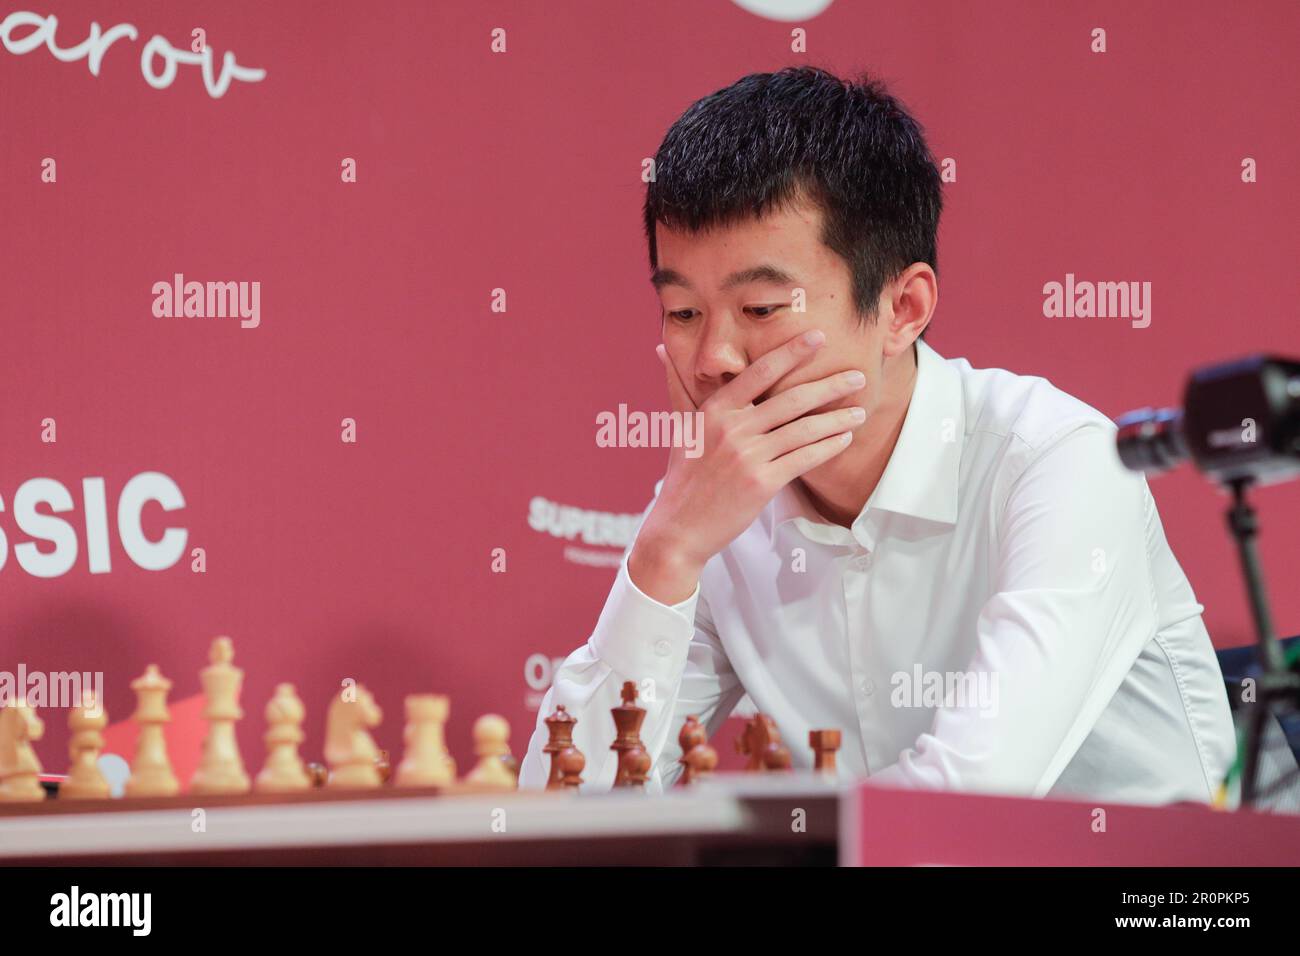 Ding Liren is 2019 Grand Chess Tour Champion